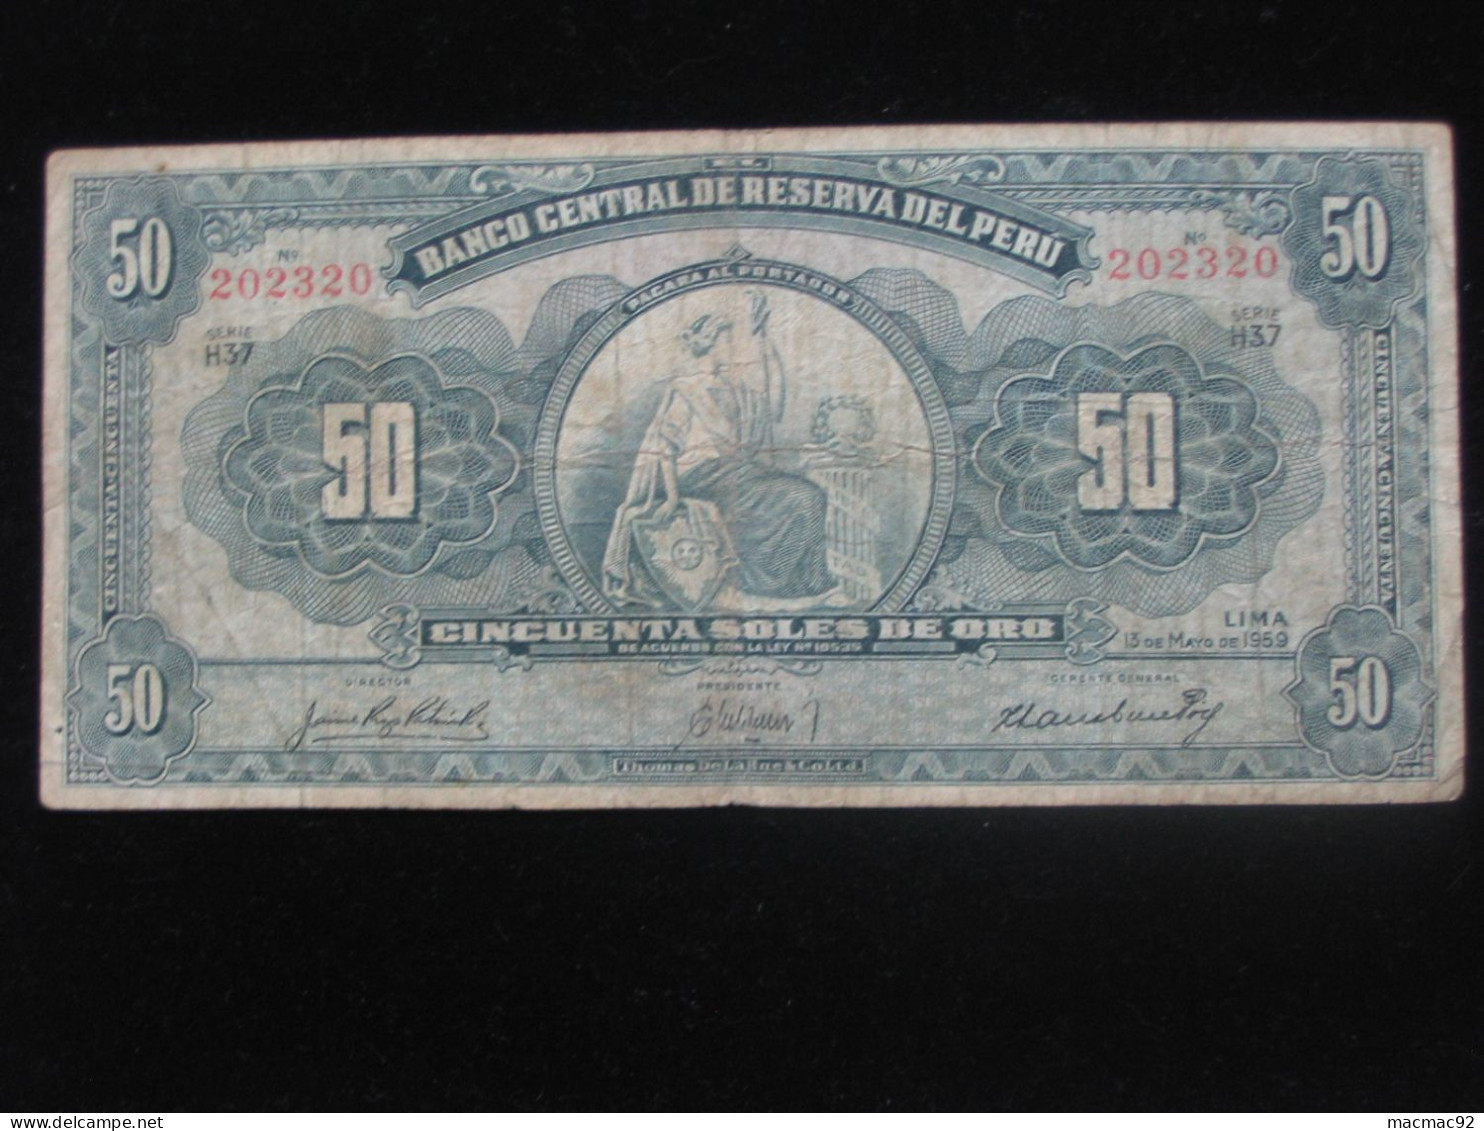 PEROU - 50 CINCUENTA SOLES DE ORO 1967 - Banco Central De Reserva Del Peru  **** EN ACHAT IMMEDIAT **** - Perú